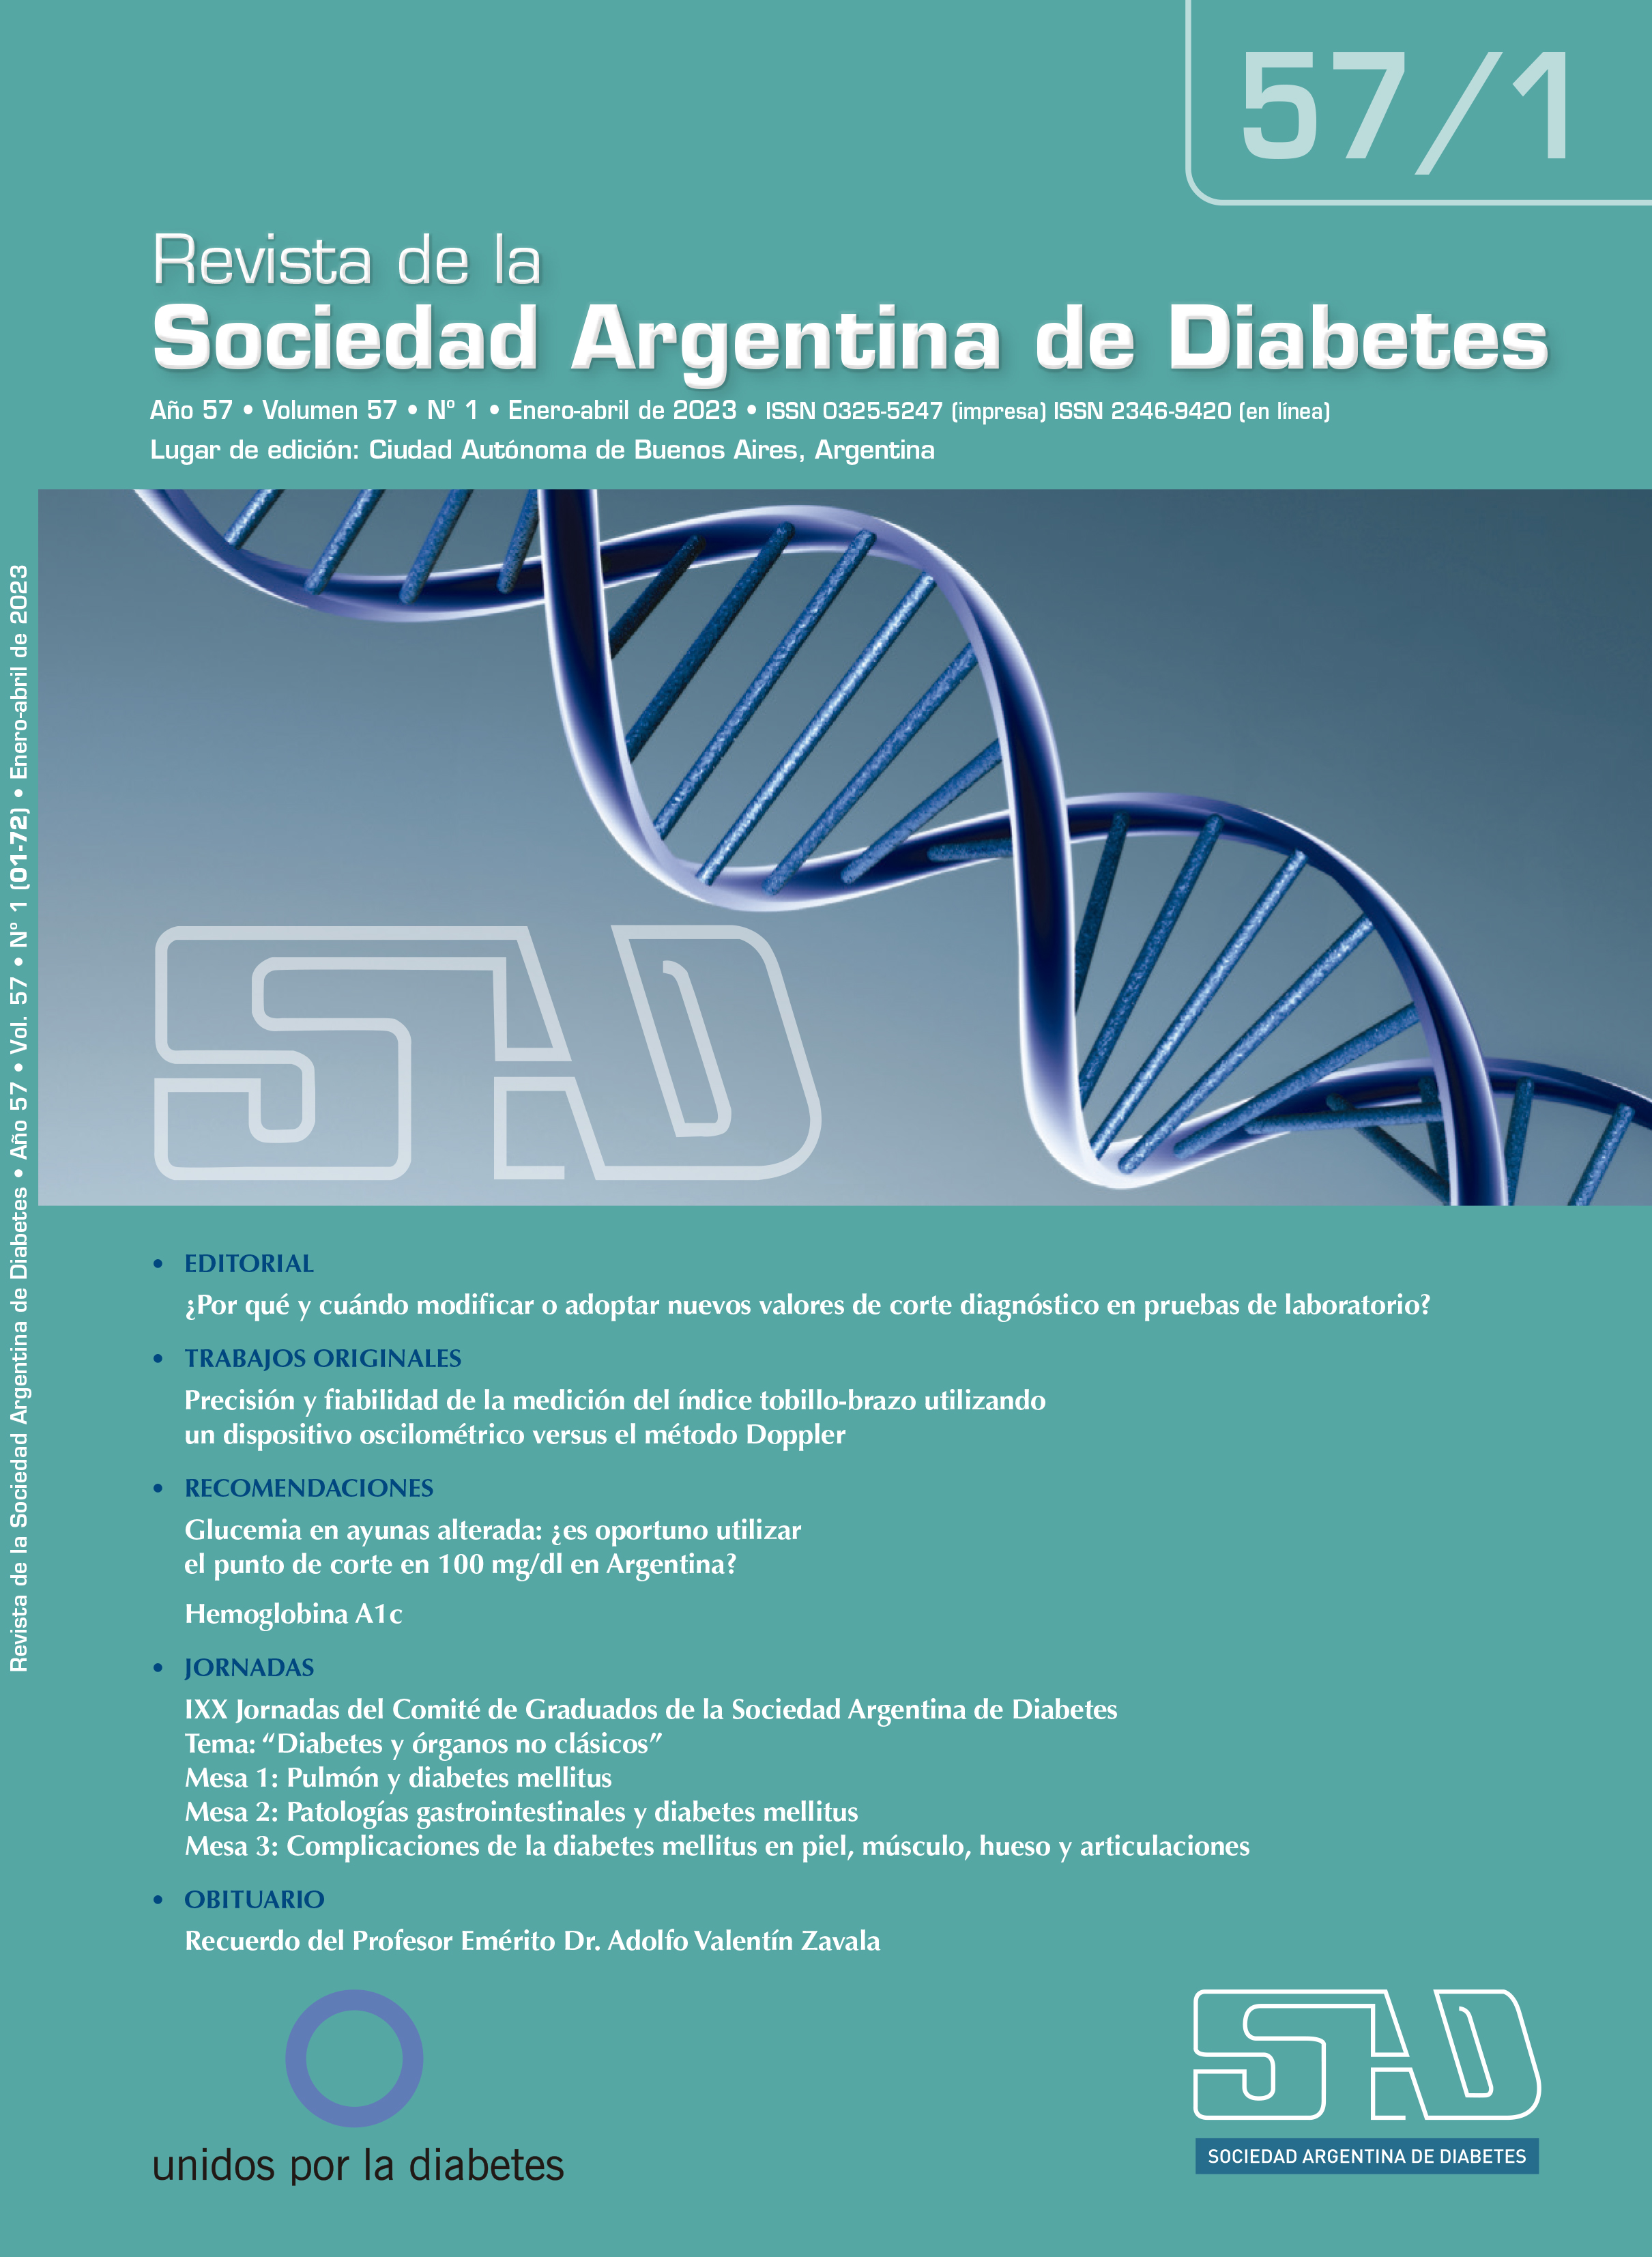 /tapasrevistas/revista_soc_argentina_diabetes.jpg